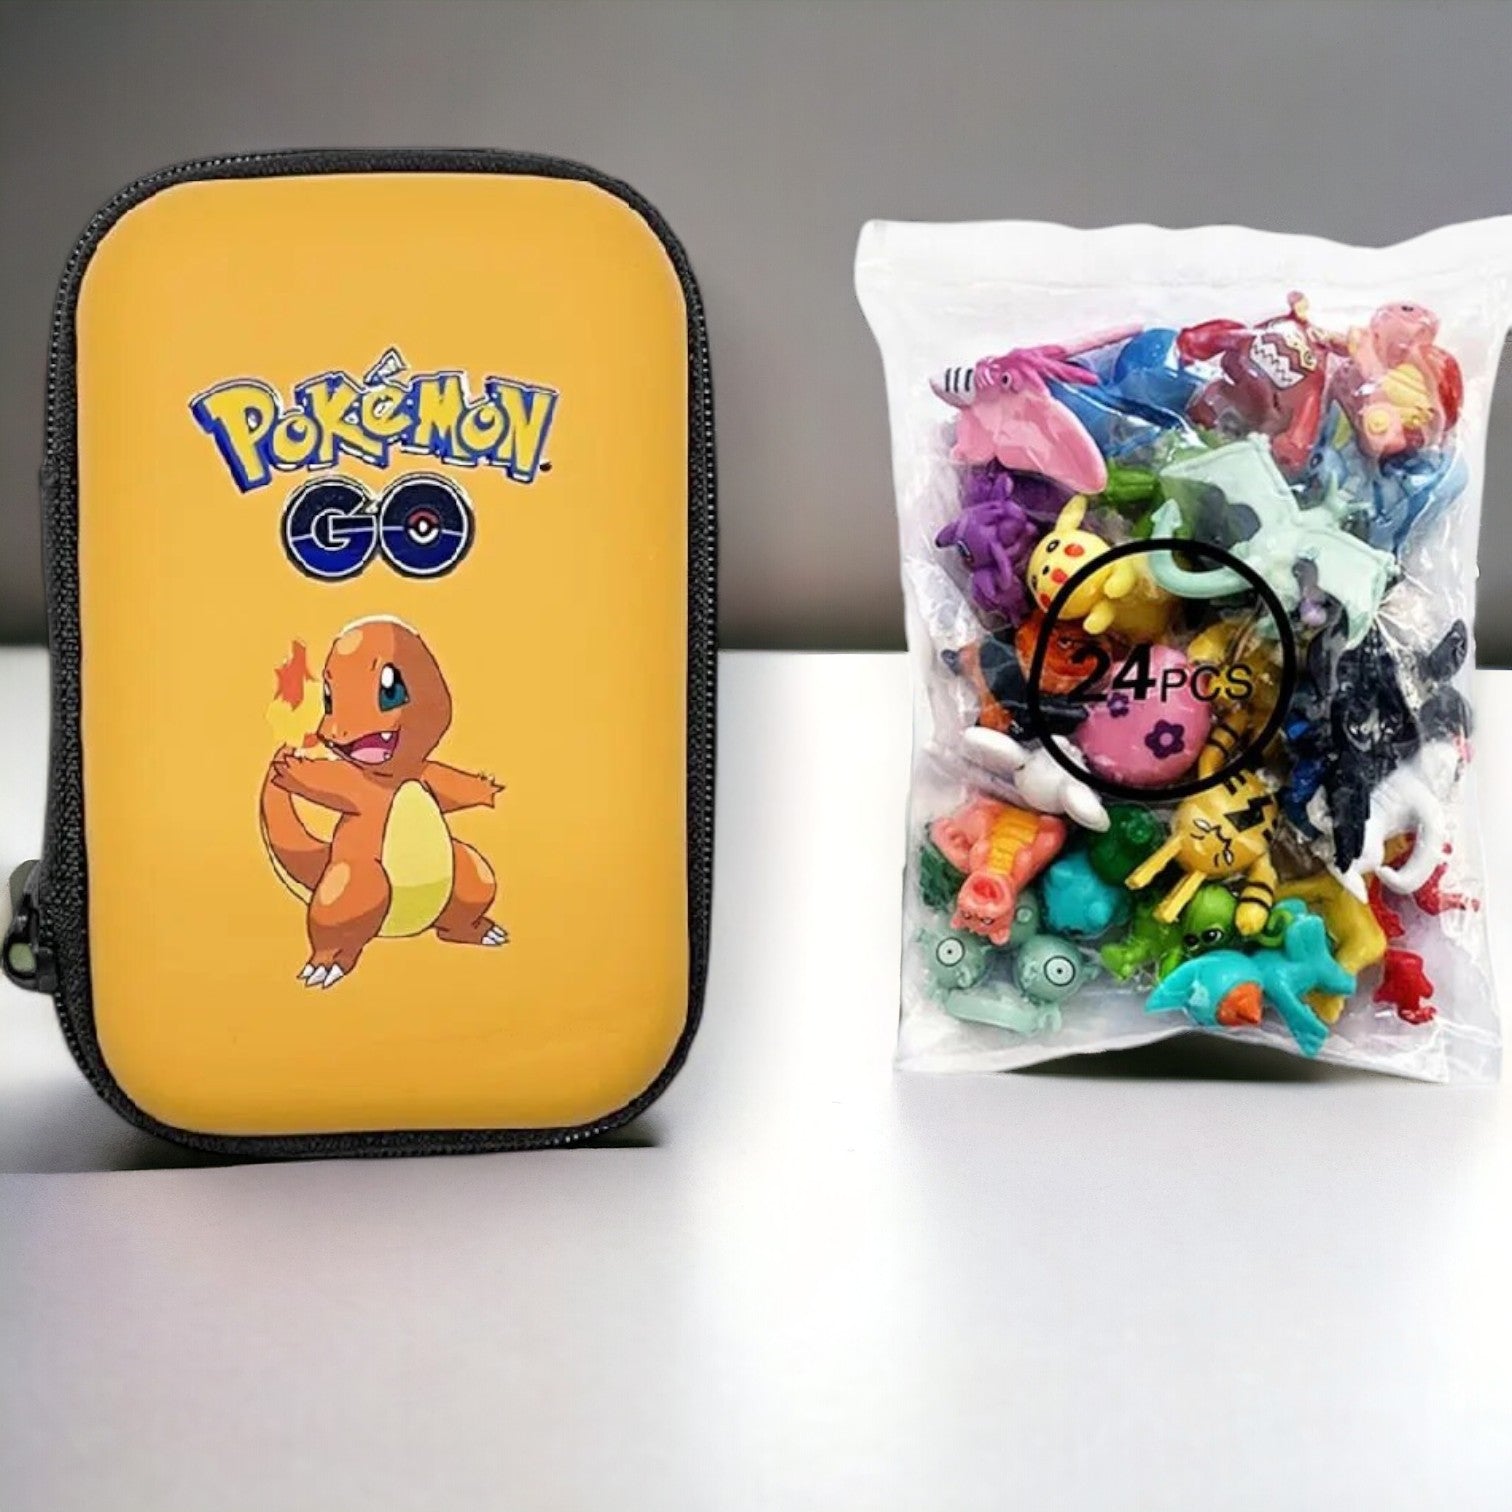 Lot of case + Pokémon figurines